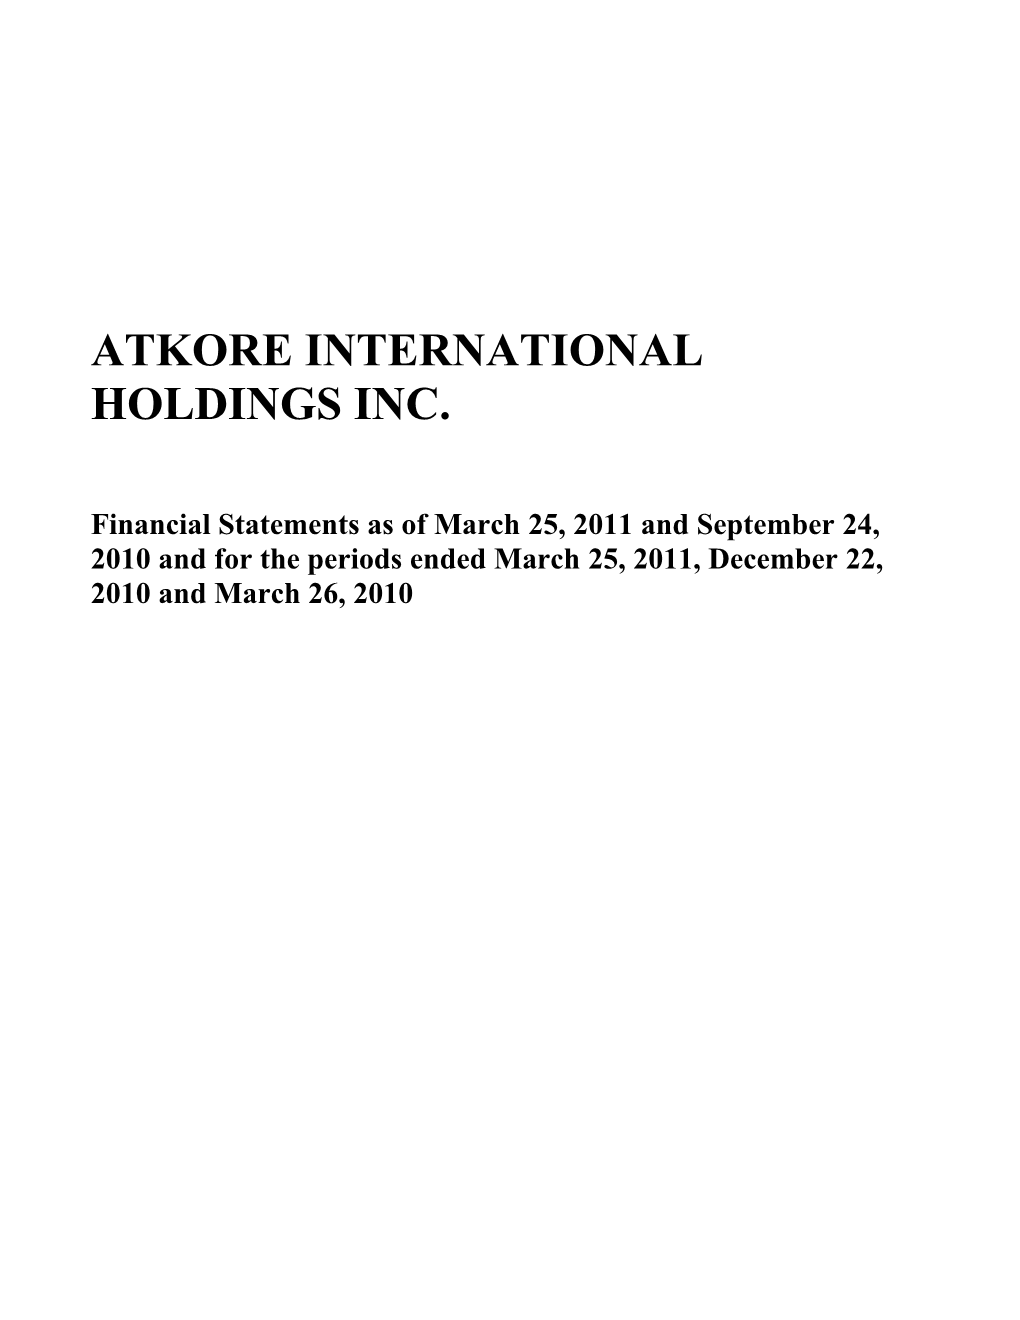 Atkore International Holdings Inc